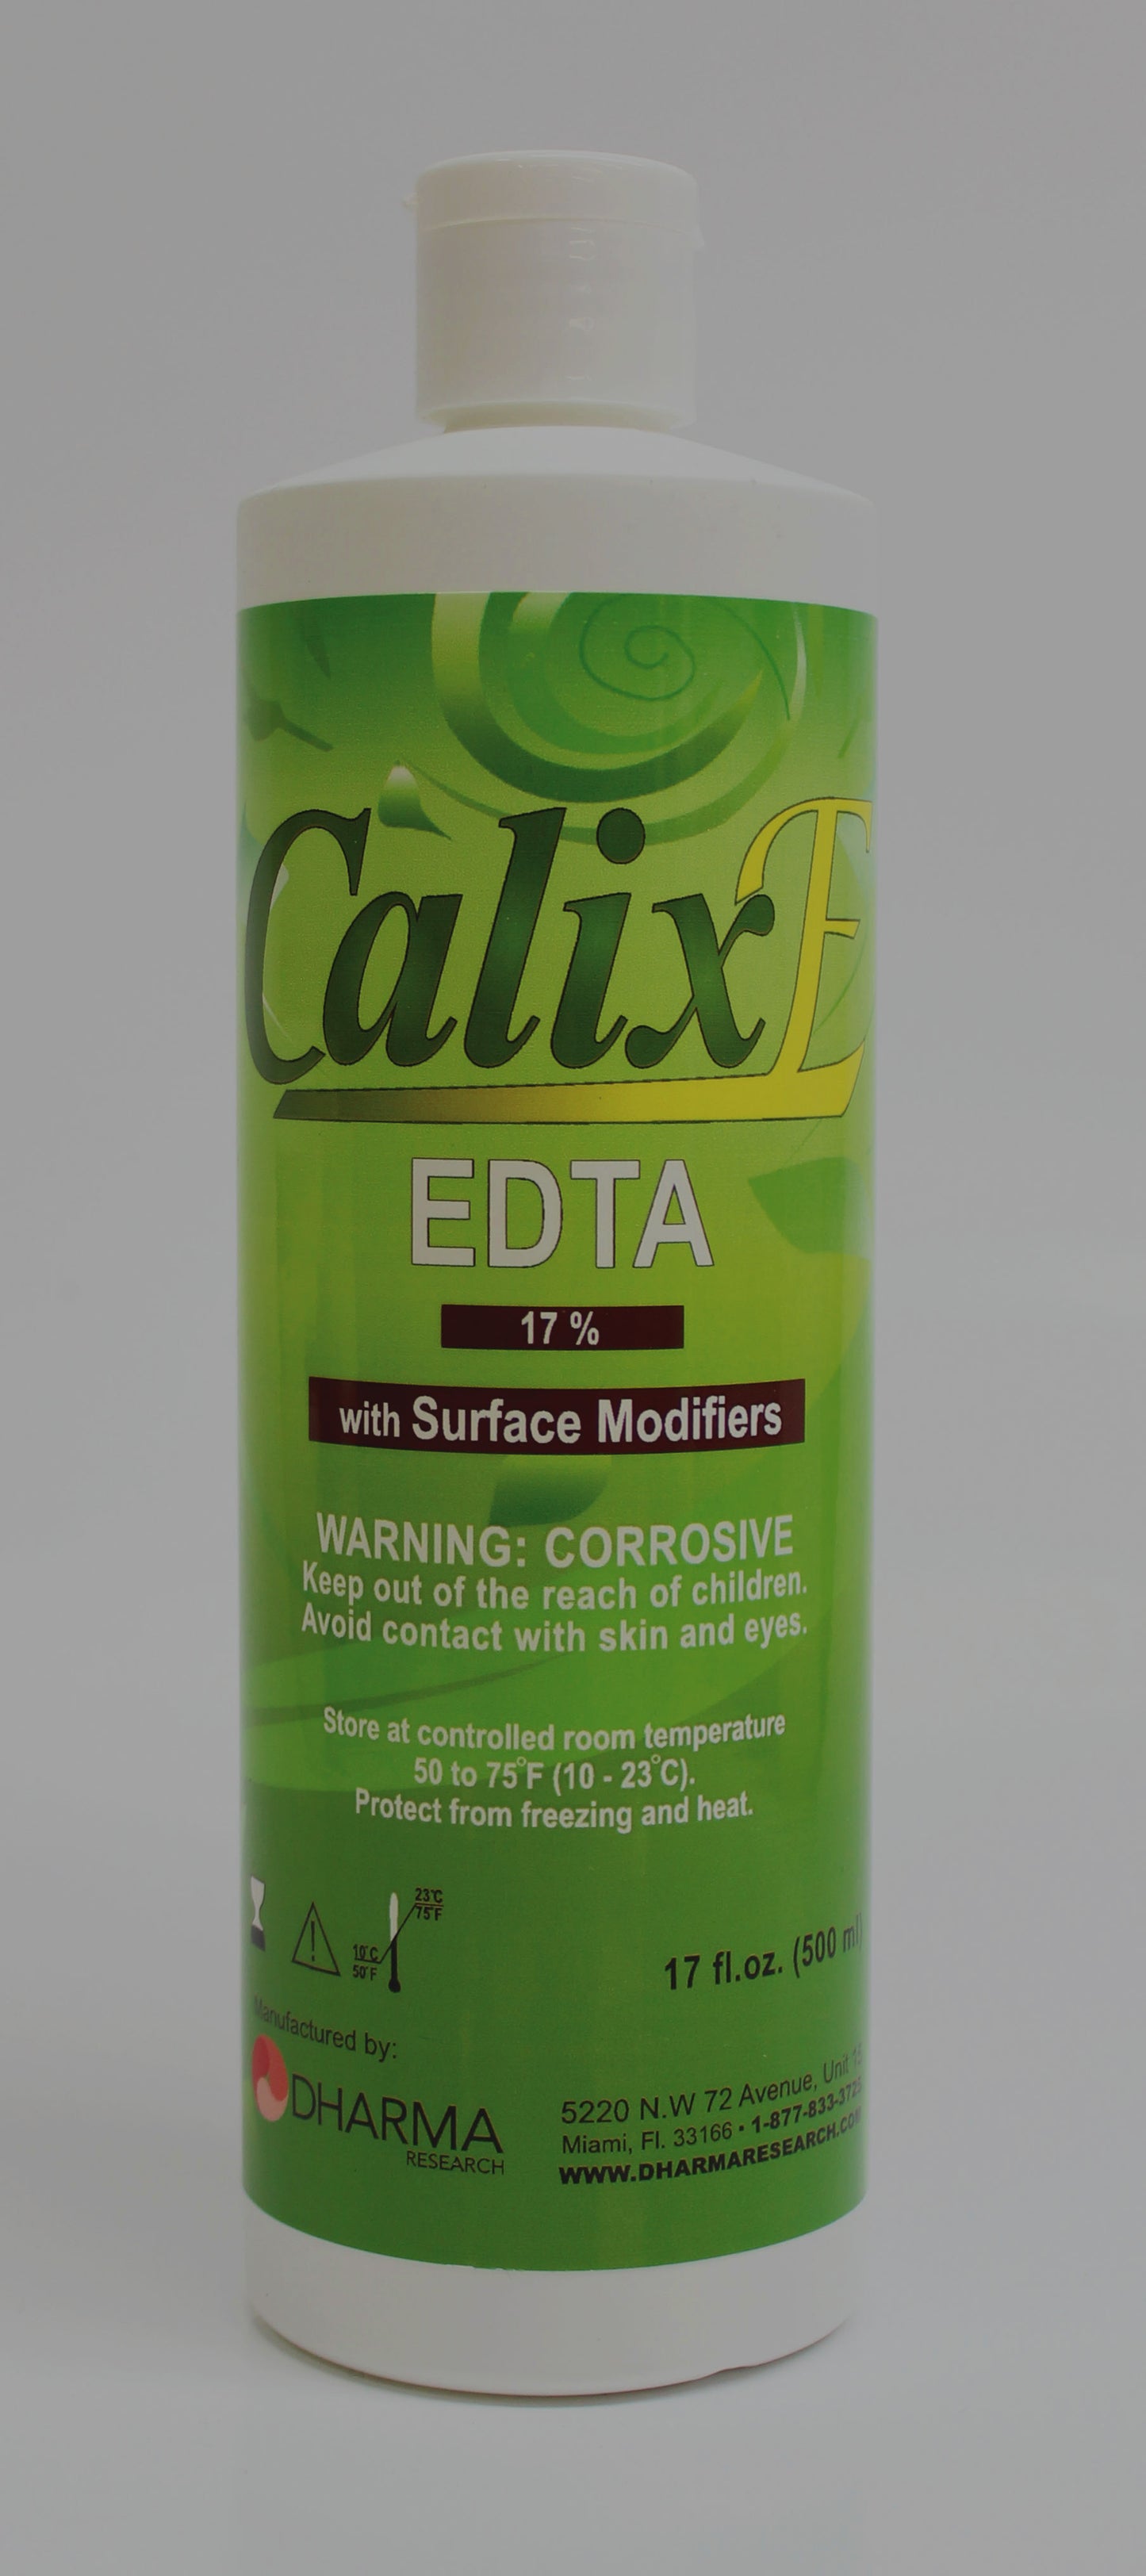 Calix-E 17% EDTA with Surface Modifiers